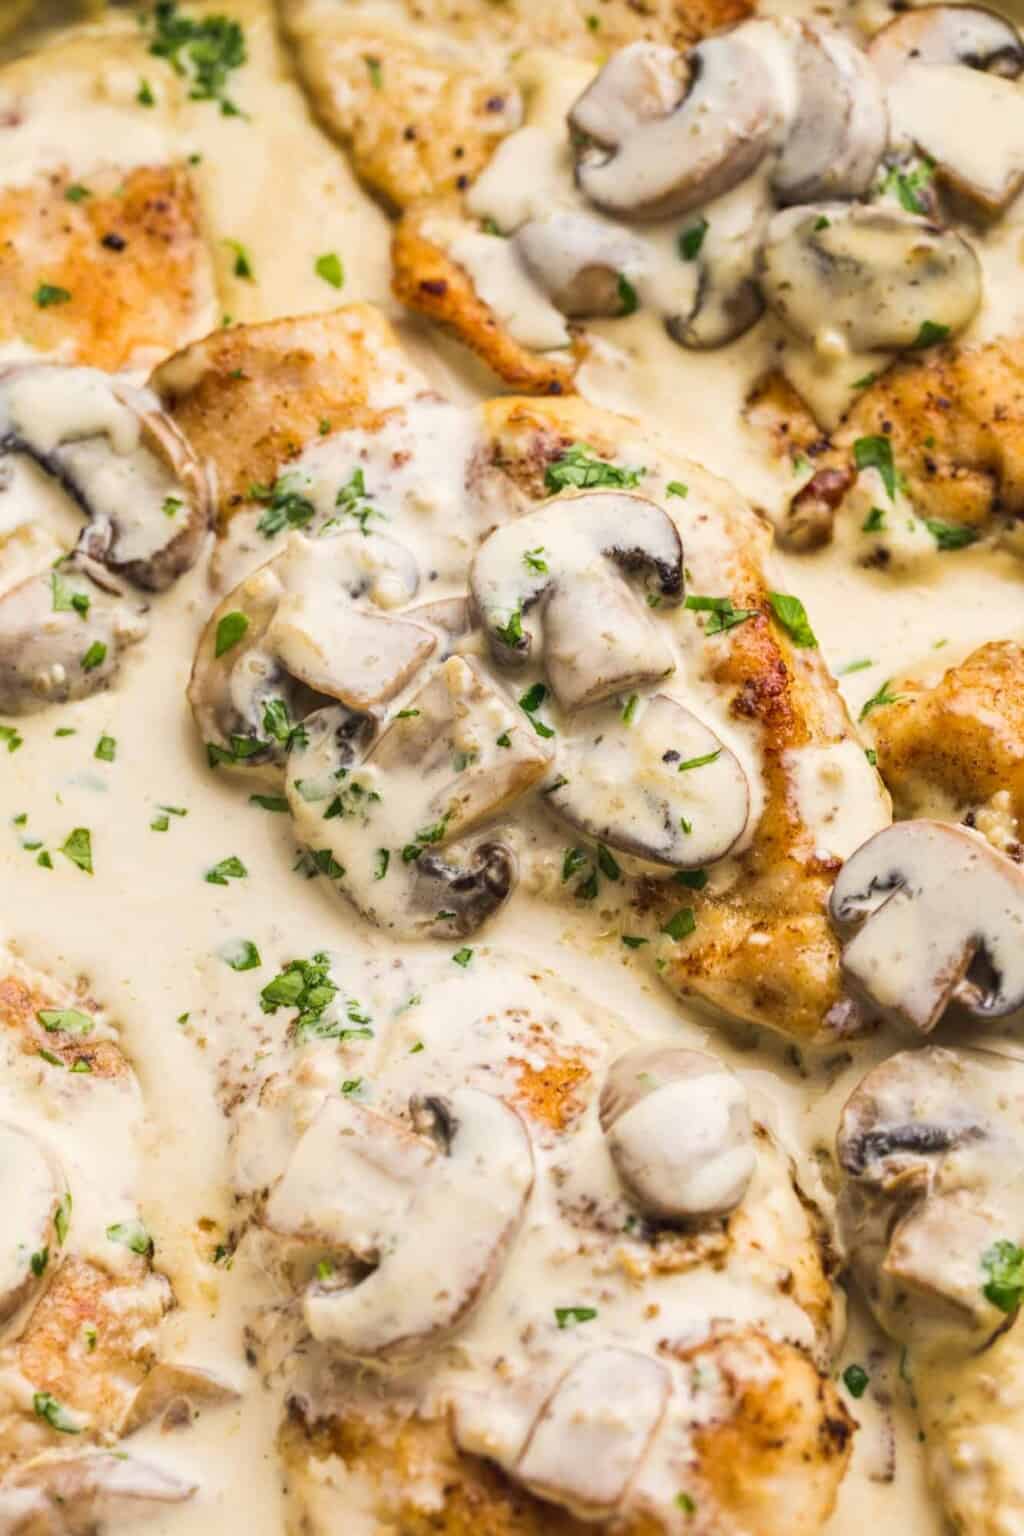 Creamy Mushroom Chicken (With an Amazing Cream Sauce!)